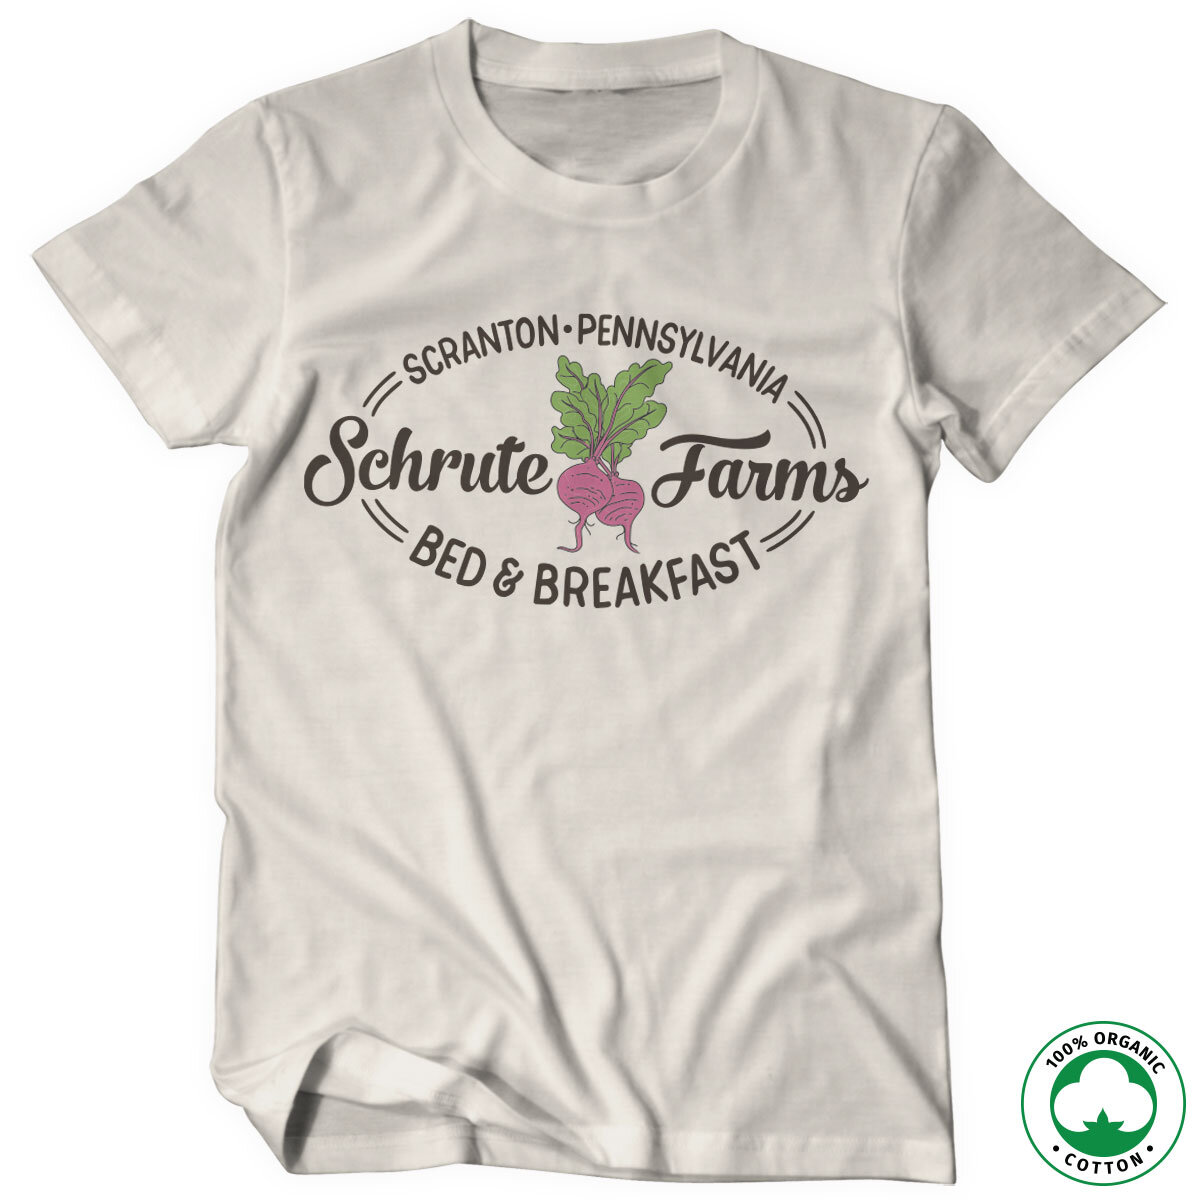 Schrute Farms - Bed & Breakfast Organic T-Shirt